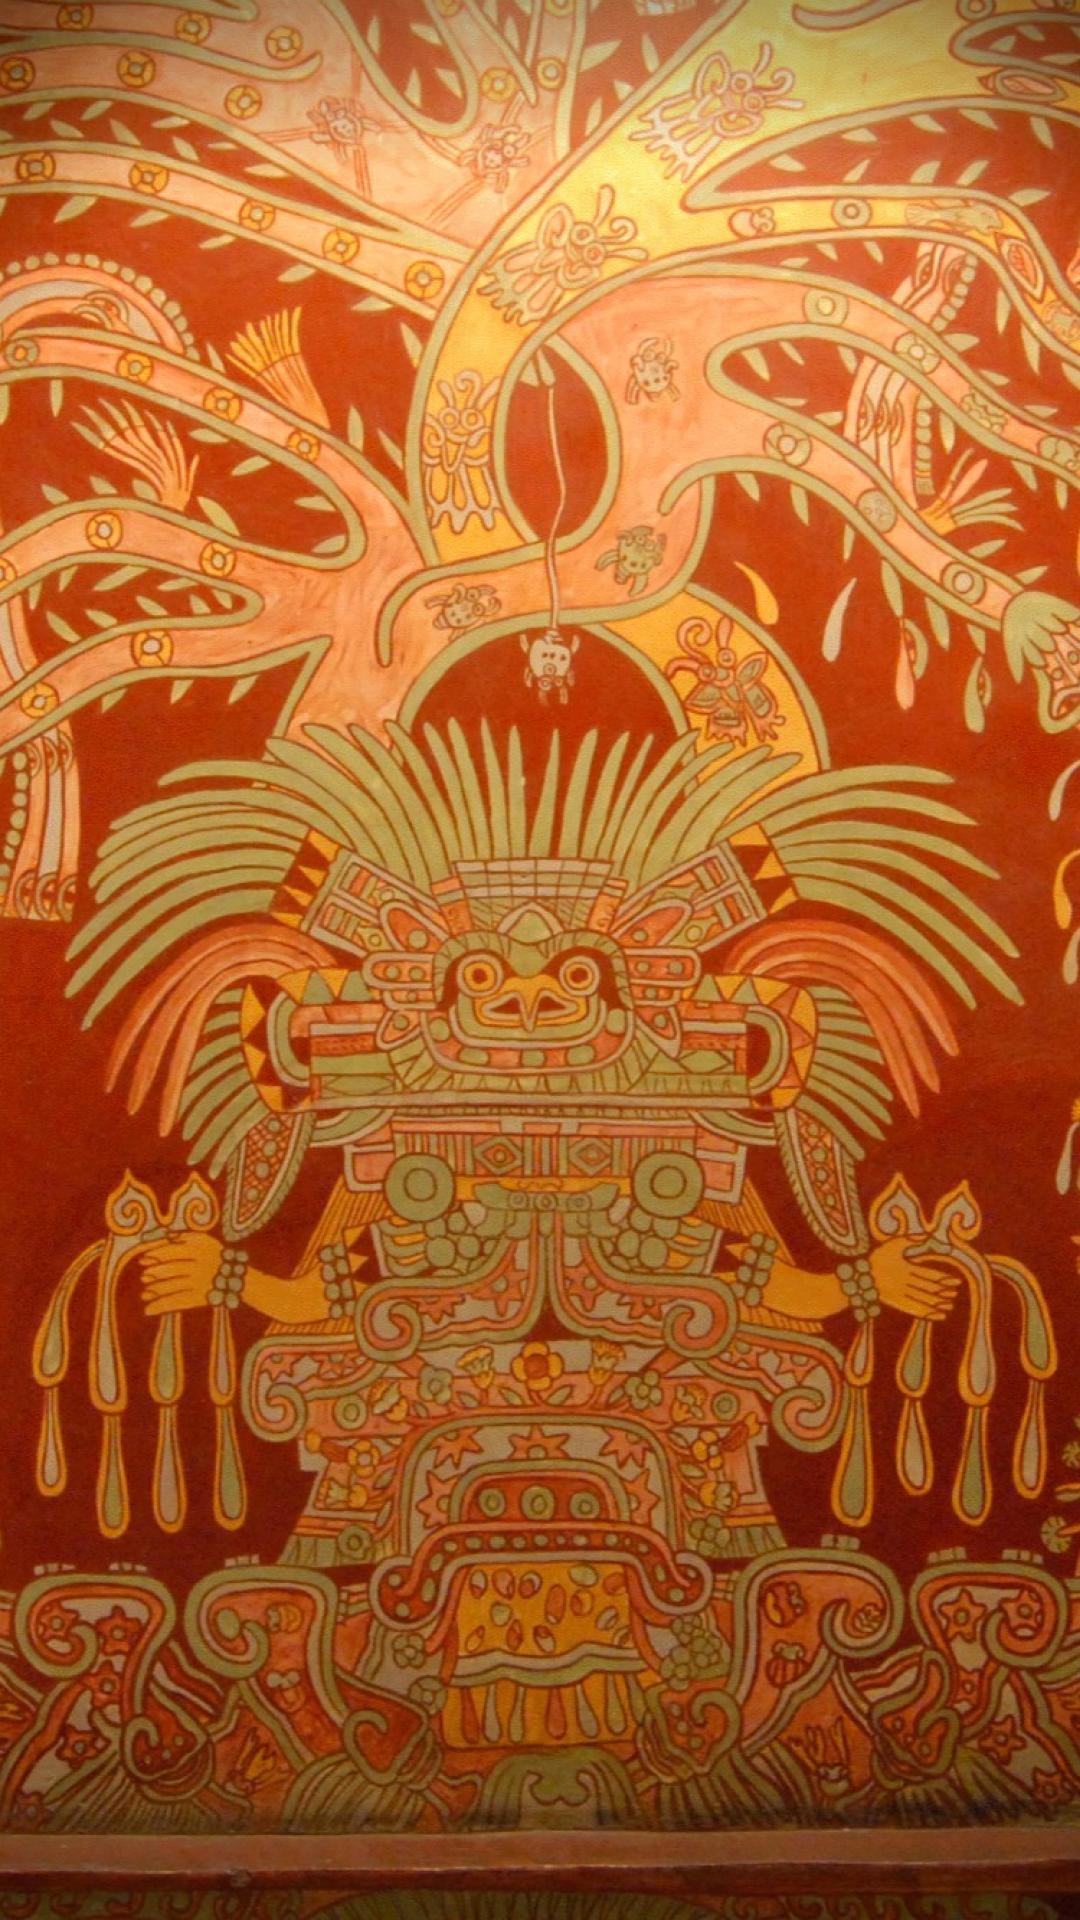 1080x1920 3216x2136 Mayan Calendar Wallpapers - HD Wallpapers 99000